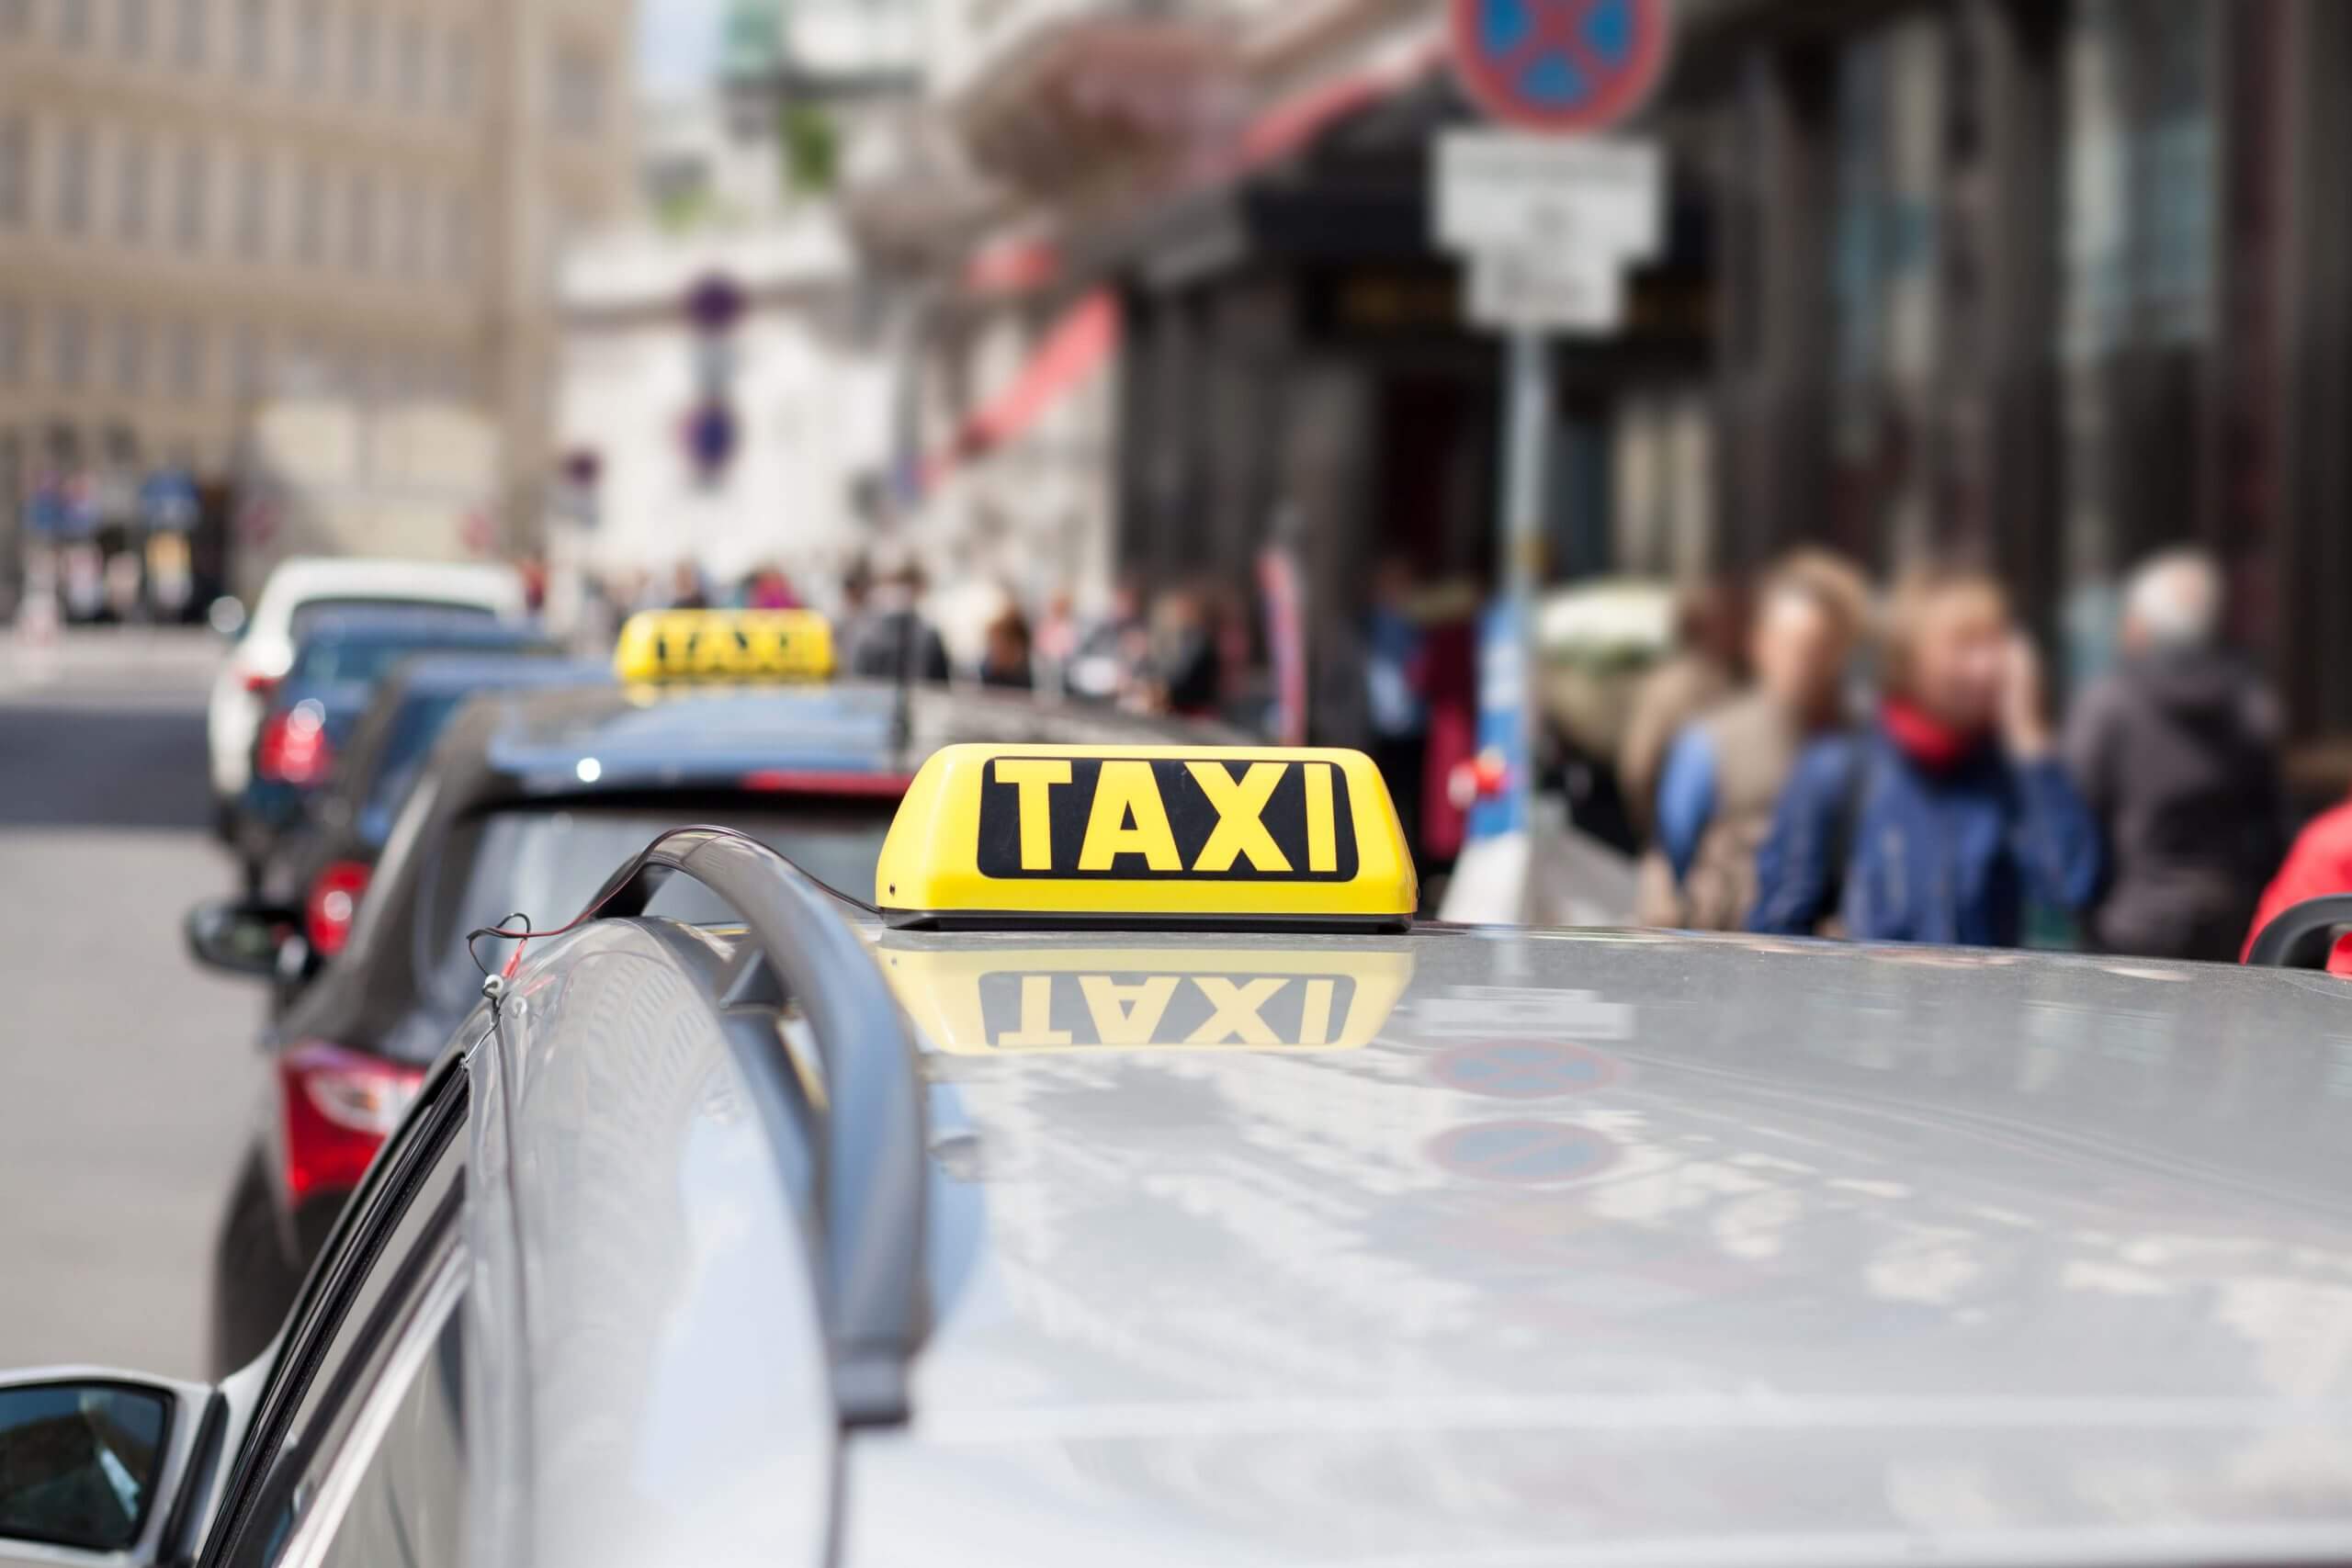 Taxicentrale Amsterdam (TCA) kiest voor Traksi